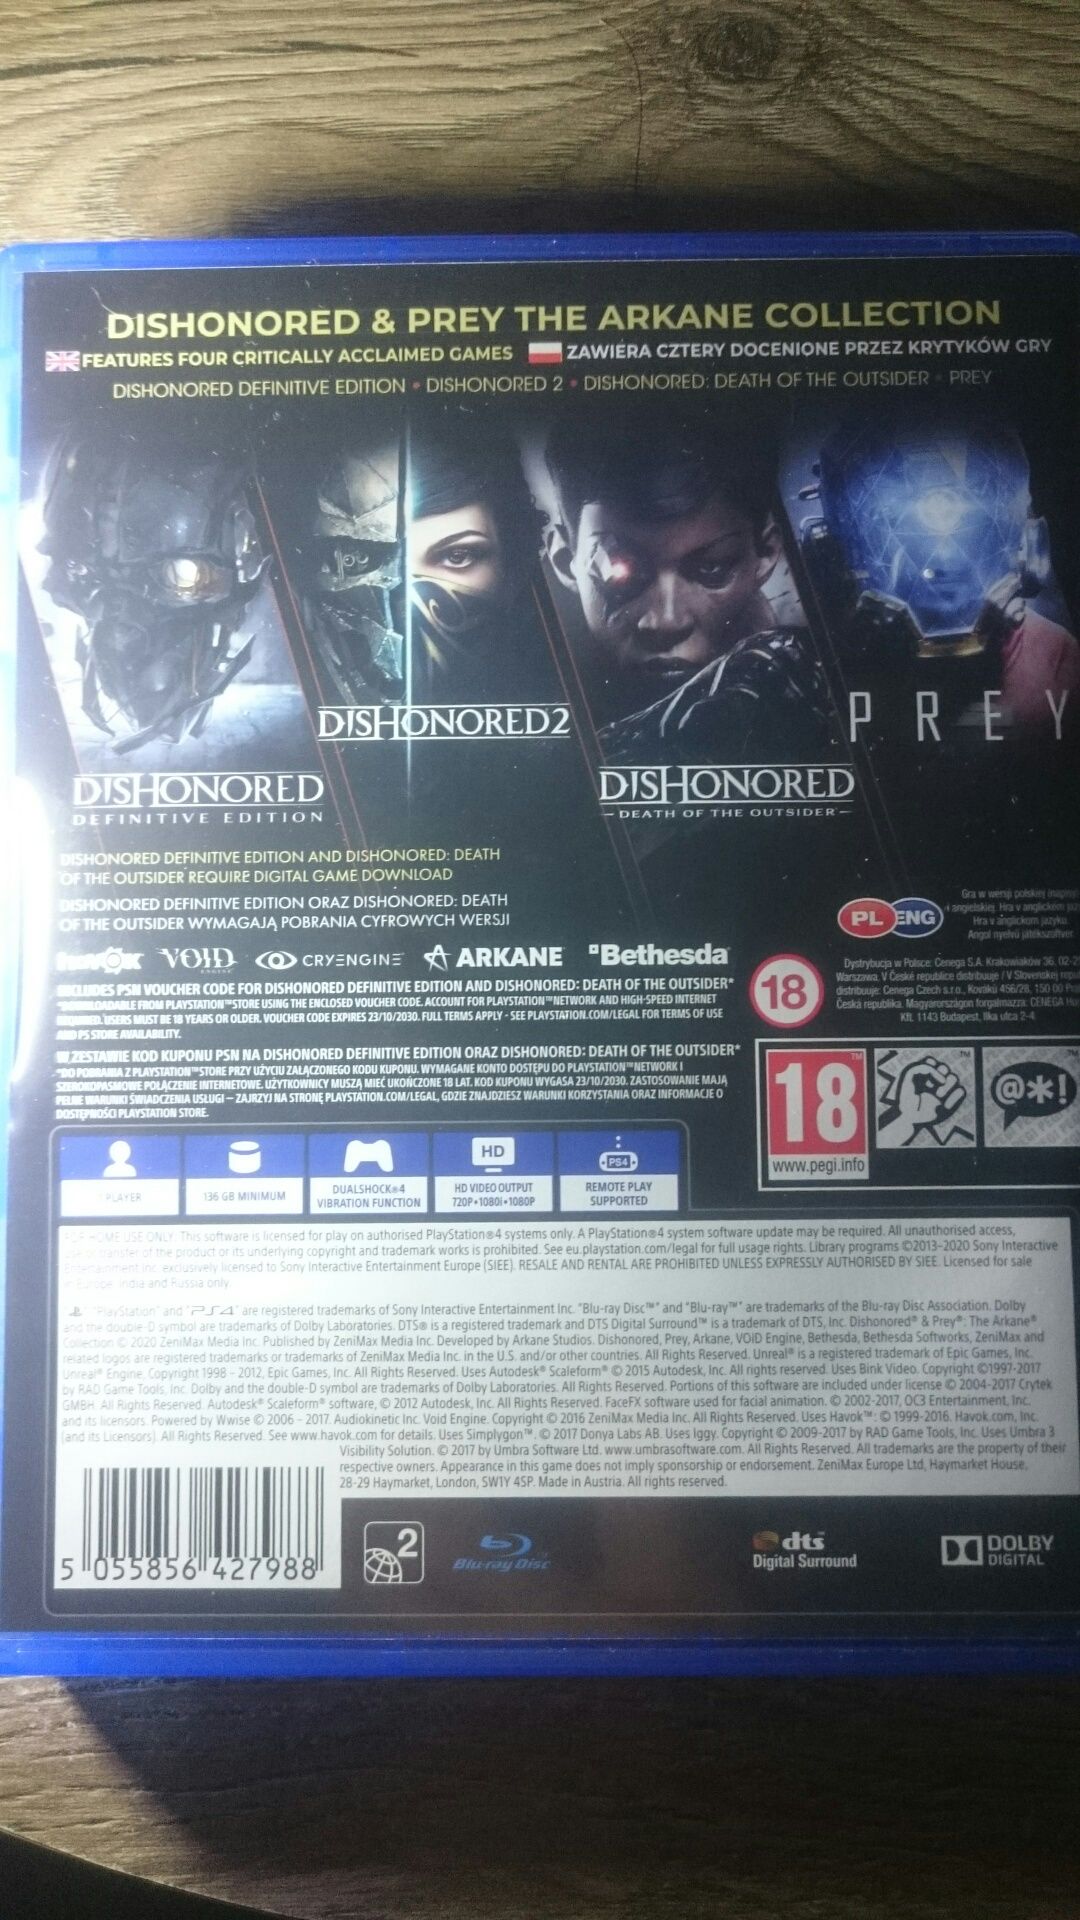 Gry Dishonored 2 + PREY PS4 Playstation 4 POLSKA god of war gta